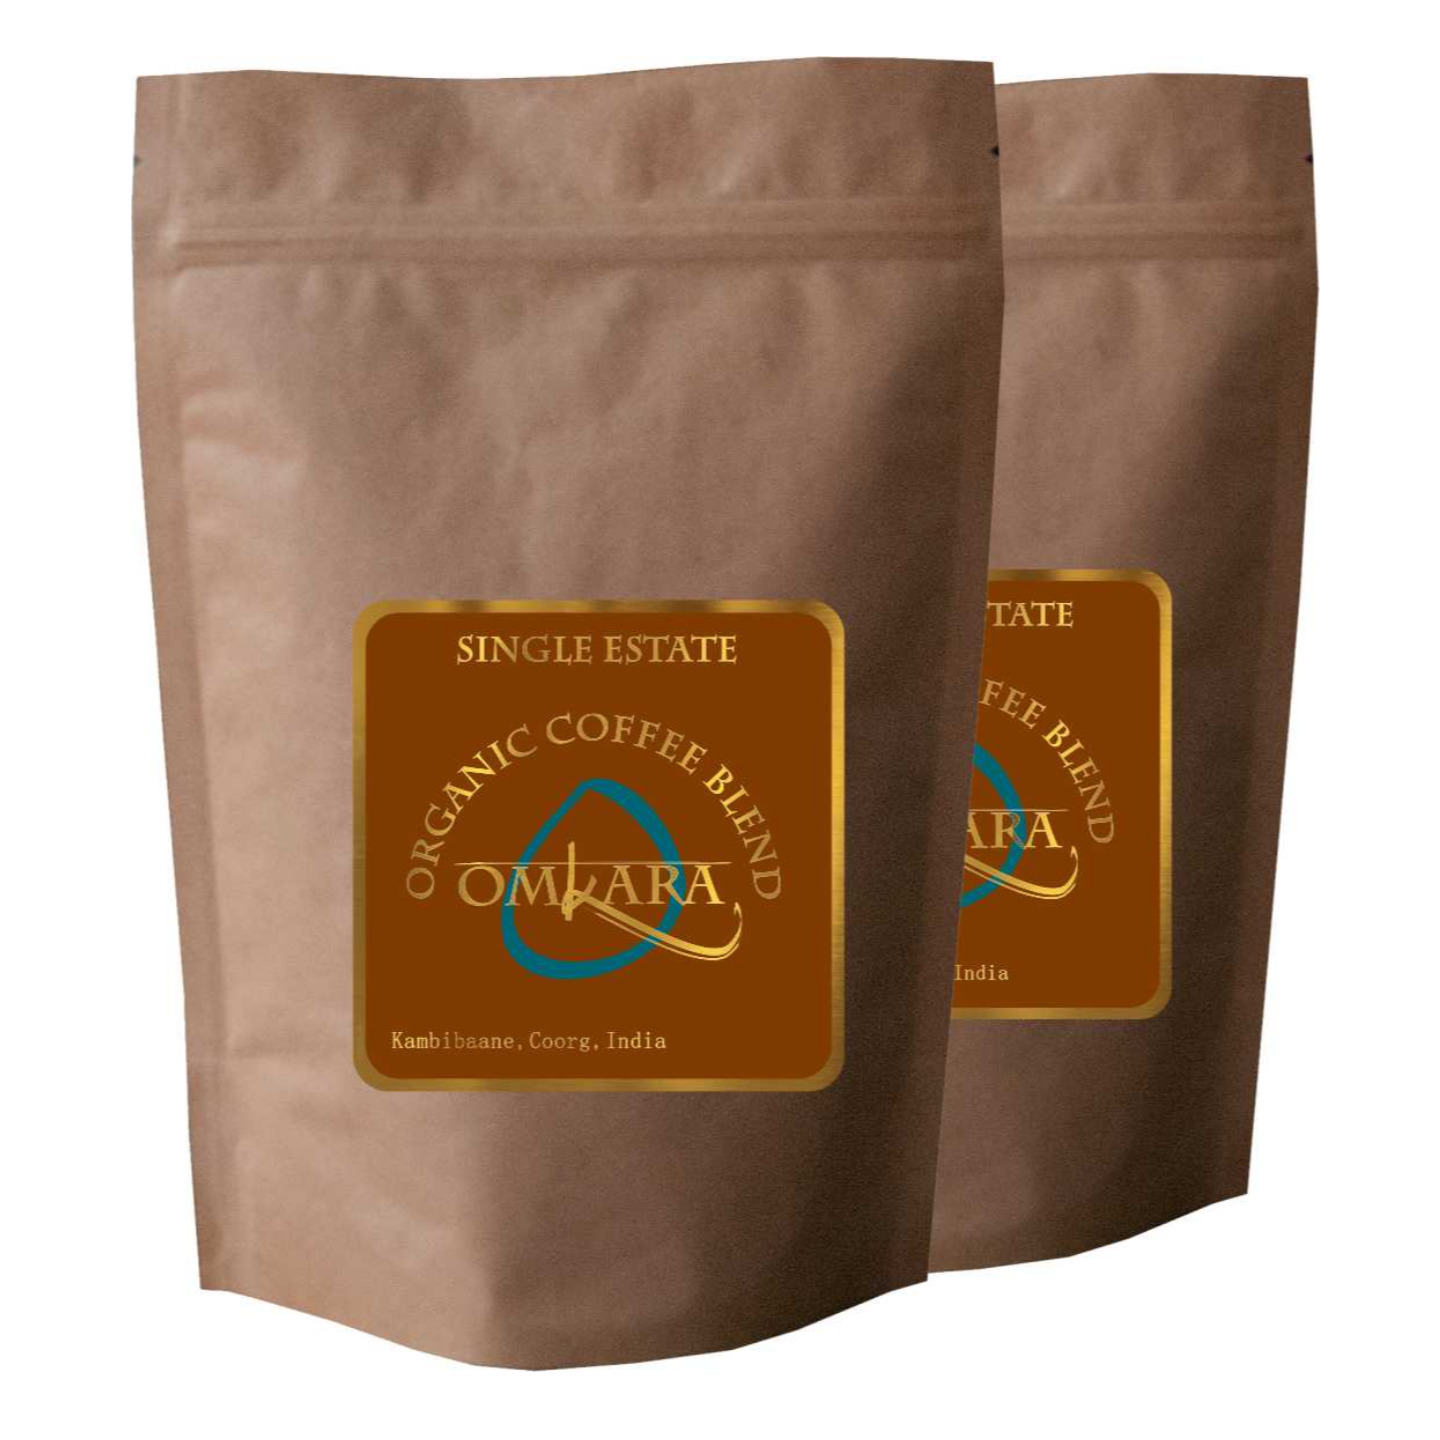 www.fivefarms.in TWIN PACK OMKARA - Single Estate Organic Coffee